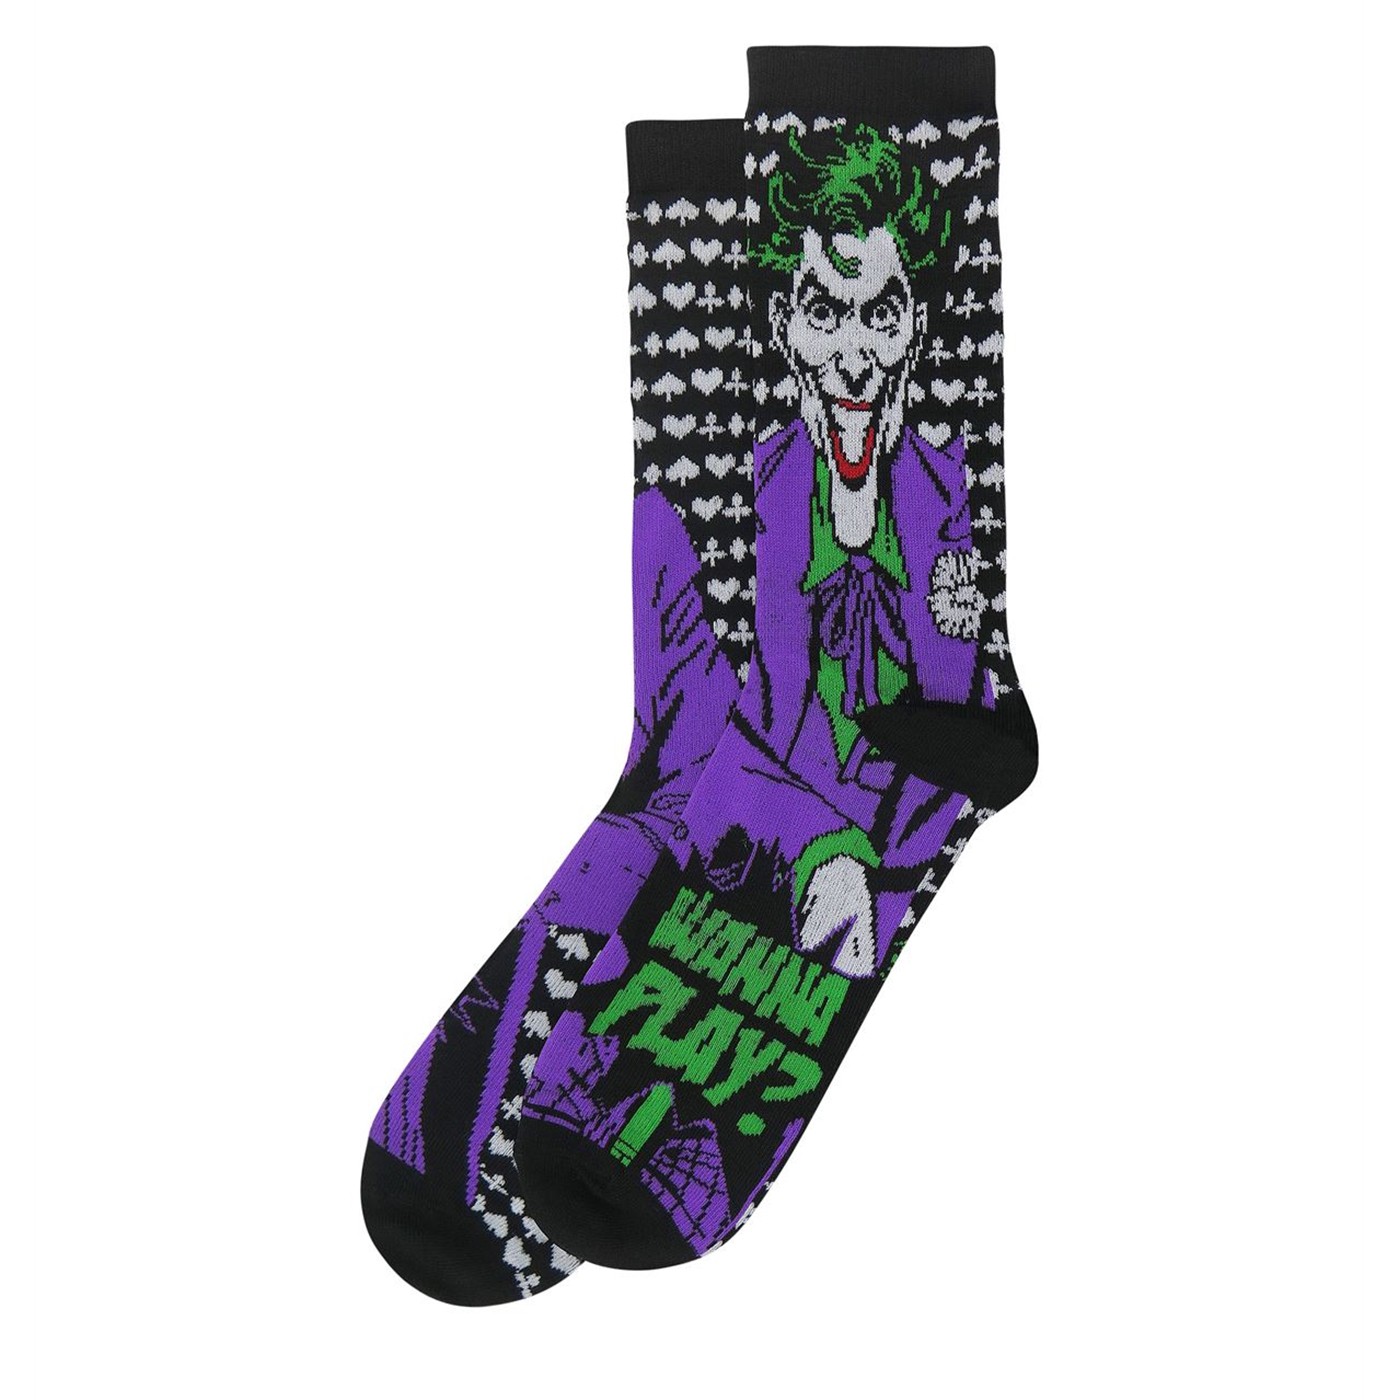 Joker Wanna Play Crew Socks